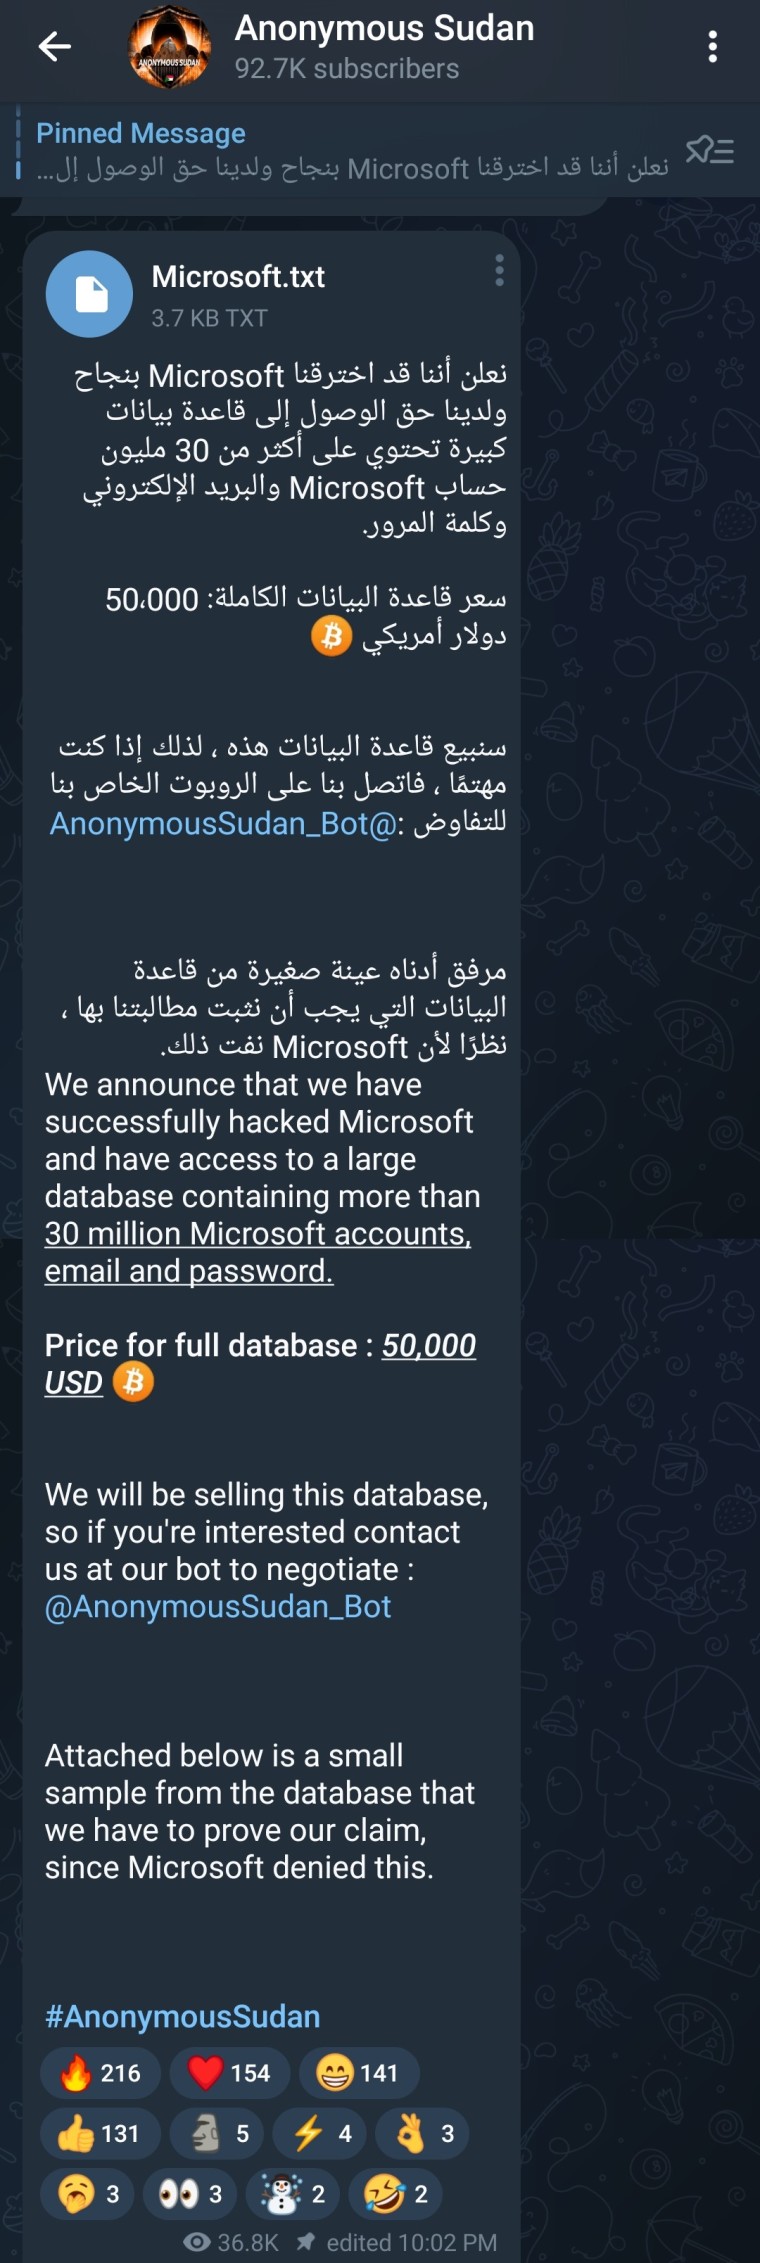 microsoft data breach accuse anonymous sudan